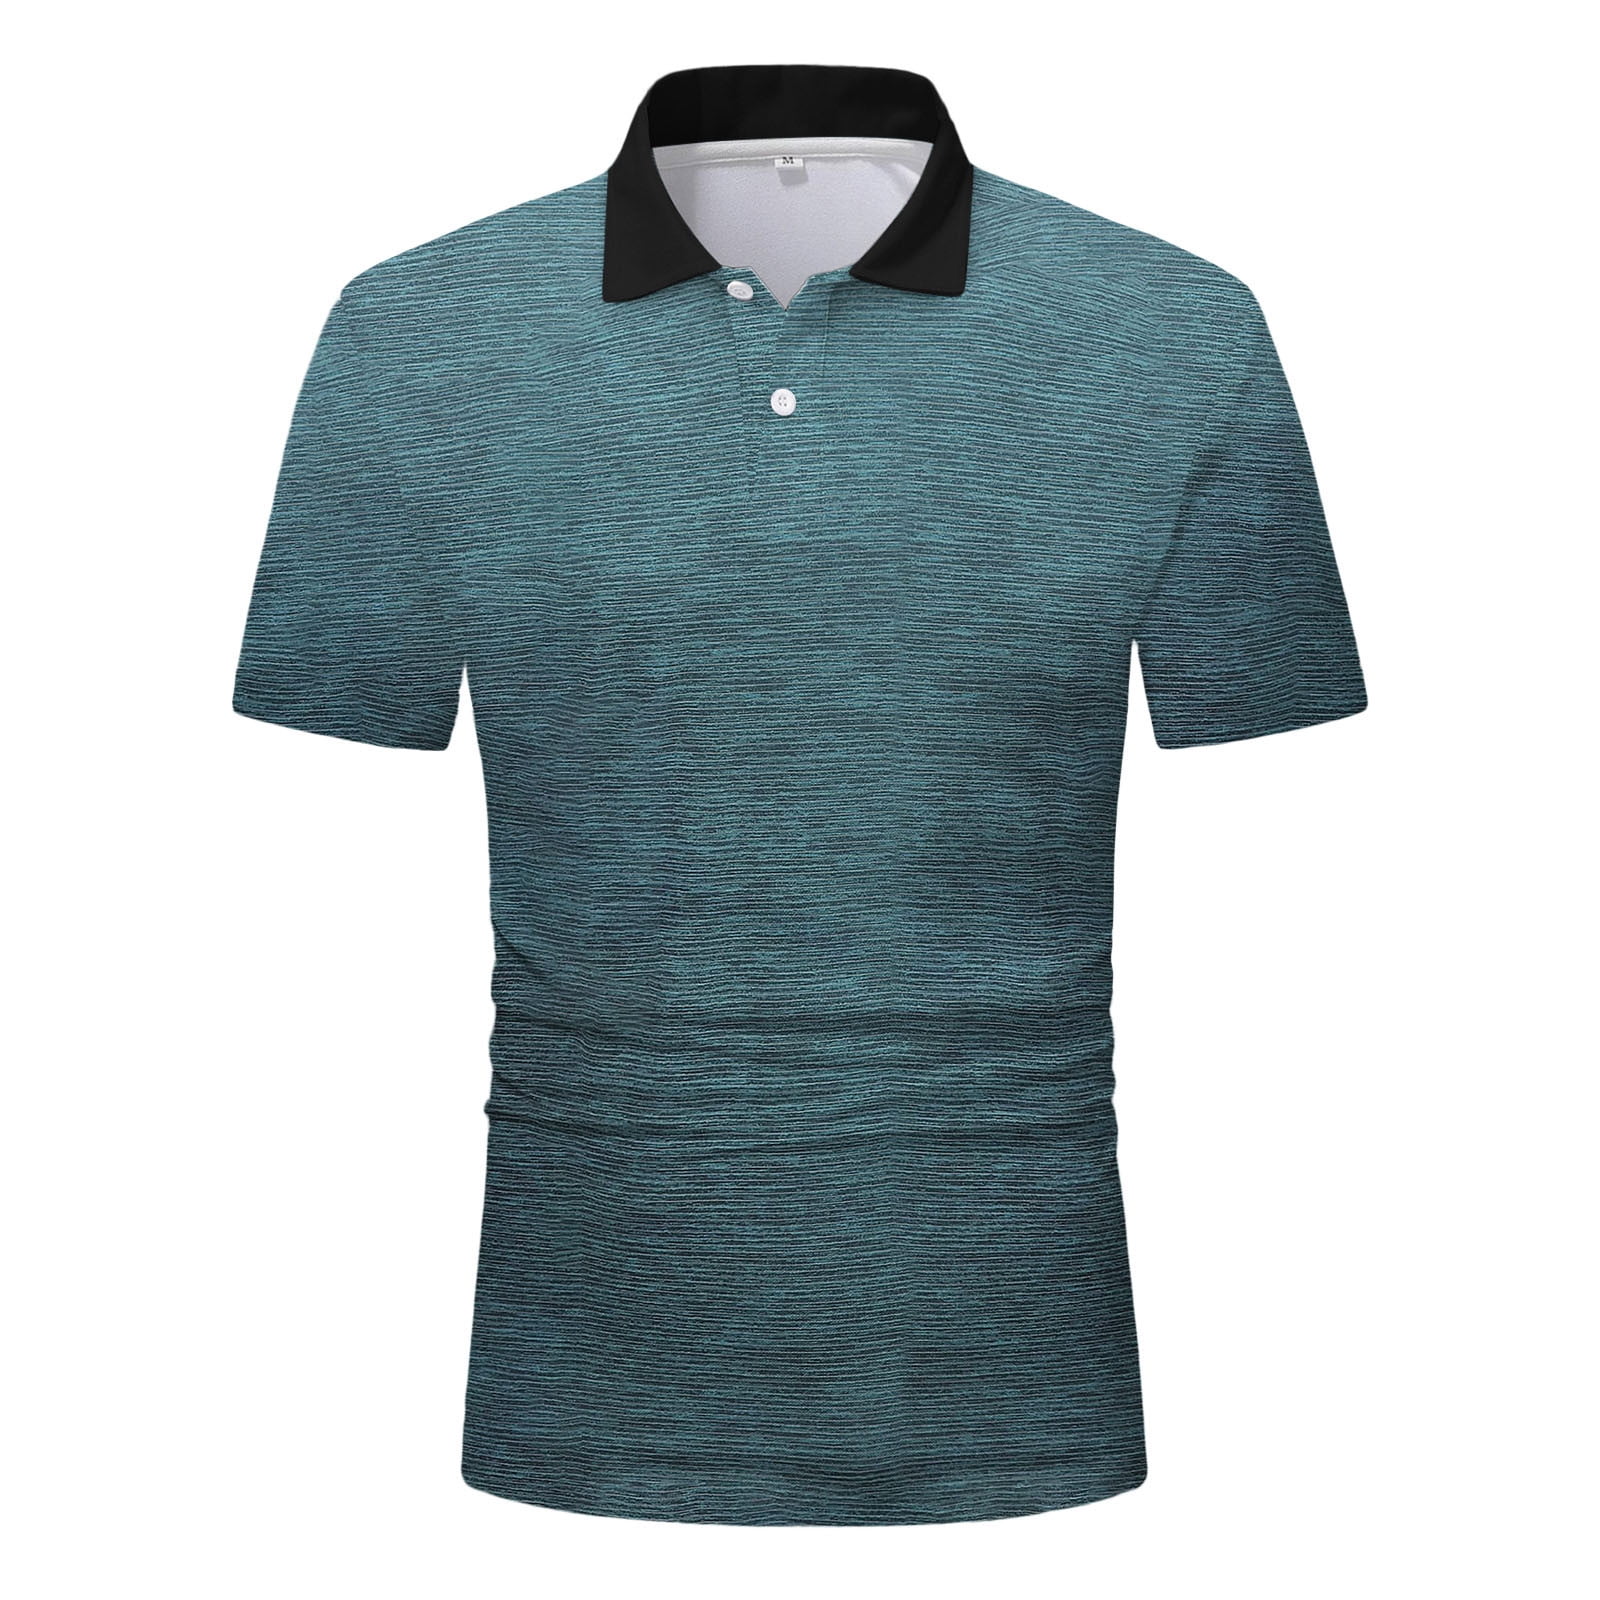 adviicd Men’s Polo Shirt – Quick Dry Regular Fit Moisture-Wicking Golf ...